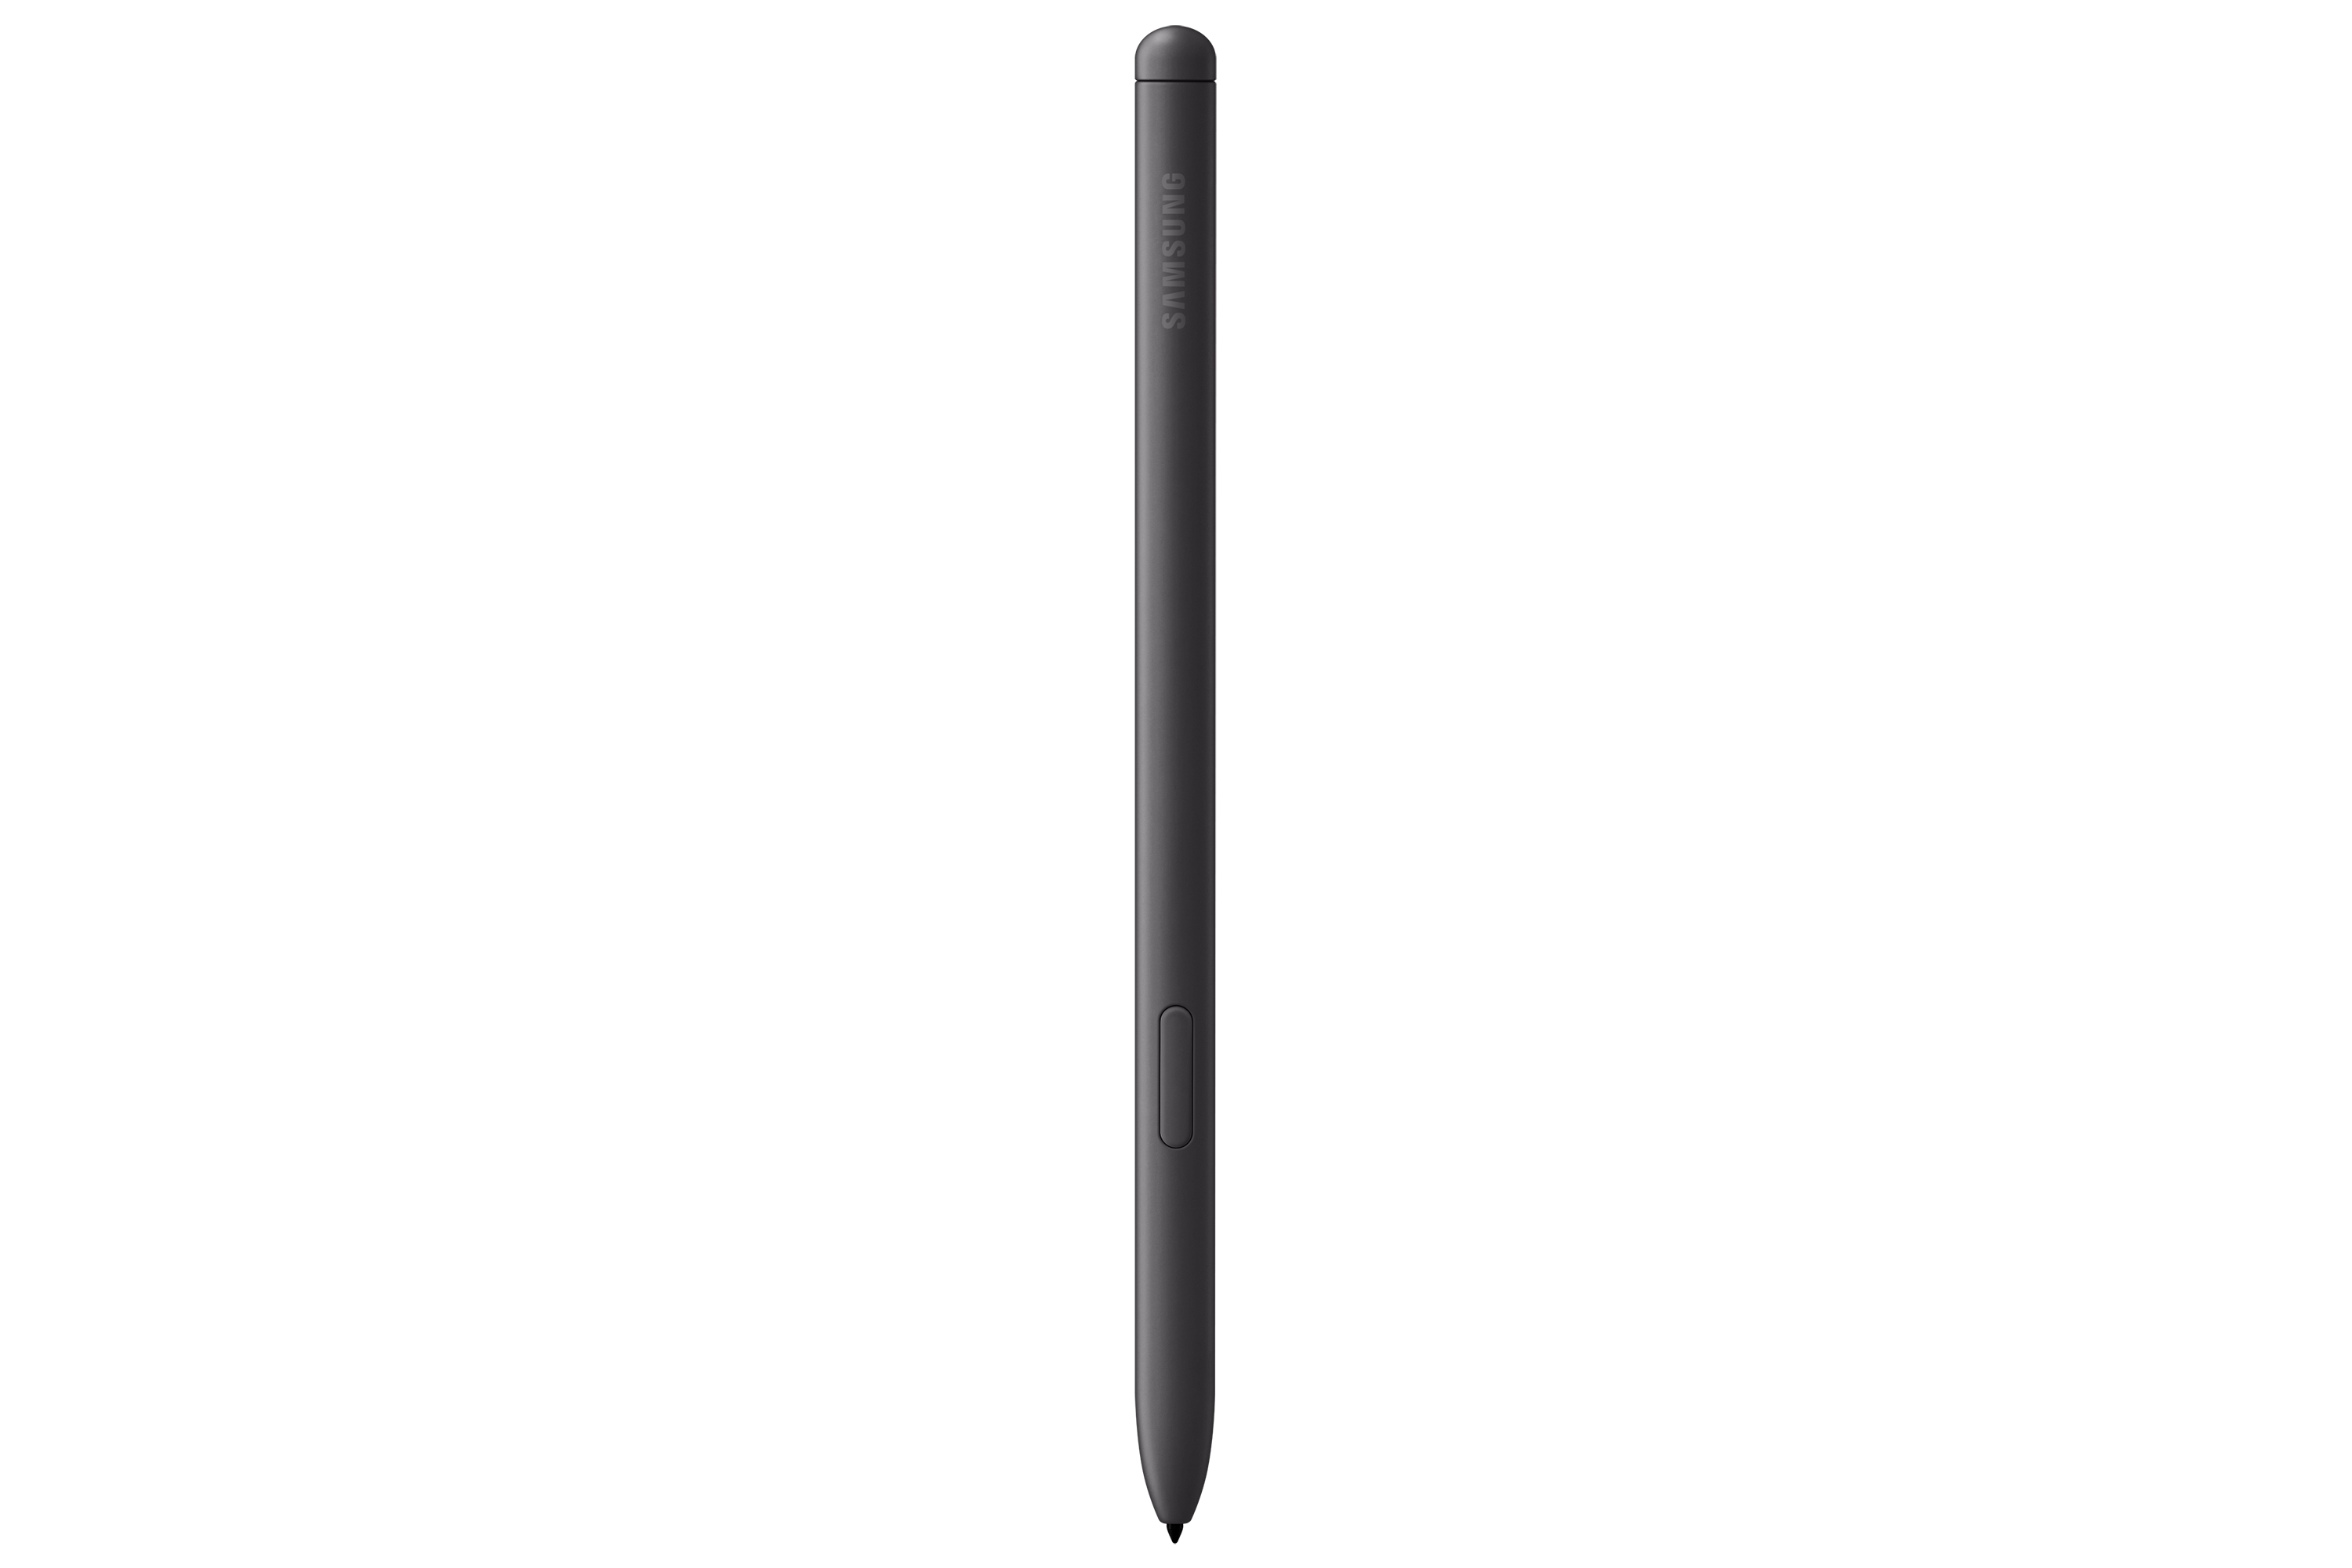 Samsung Galaxy Tab S6 lite, 10,4 inch, p615, wifi, 4G LTE, 64GB, zwart